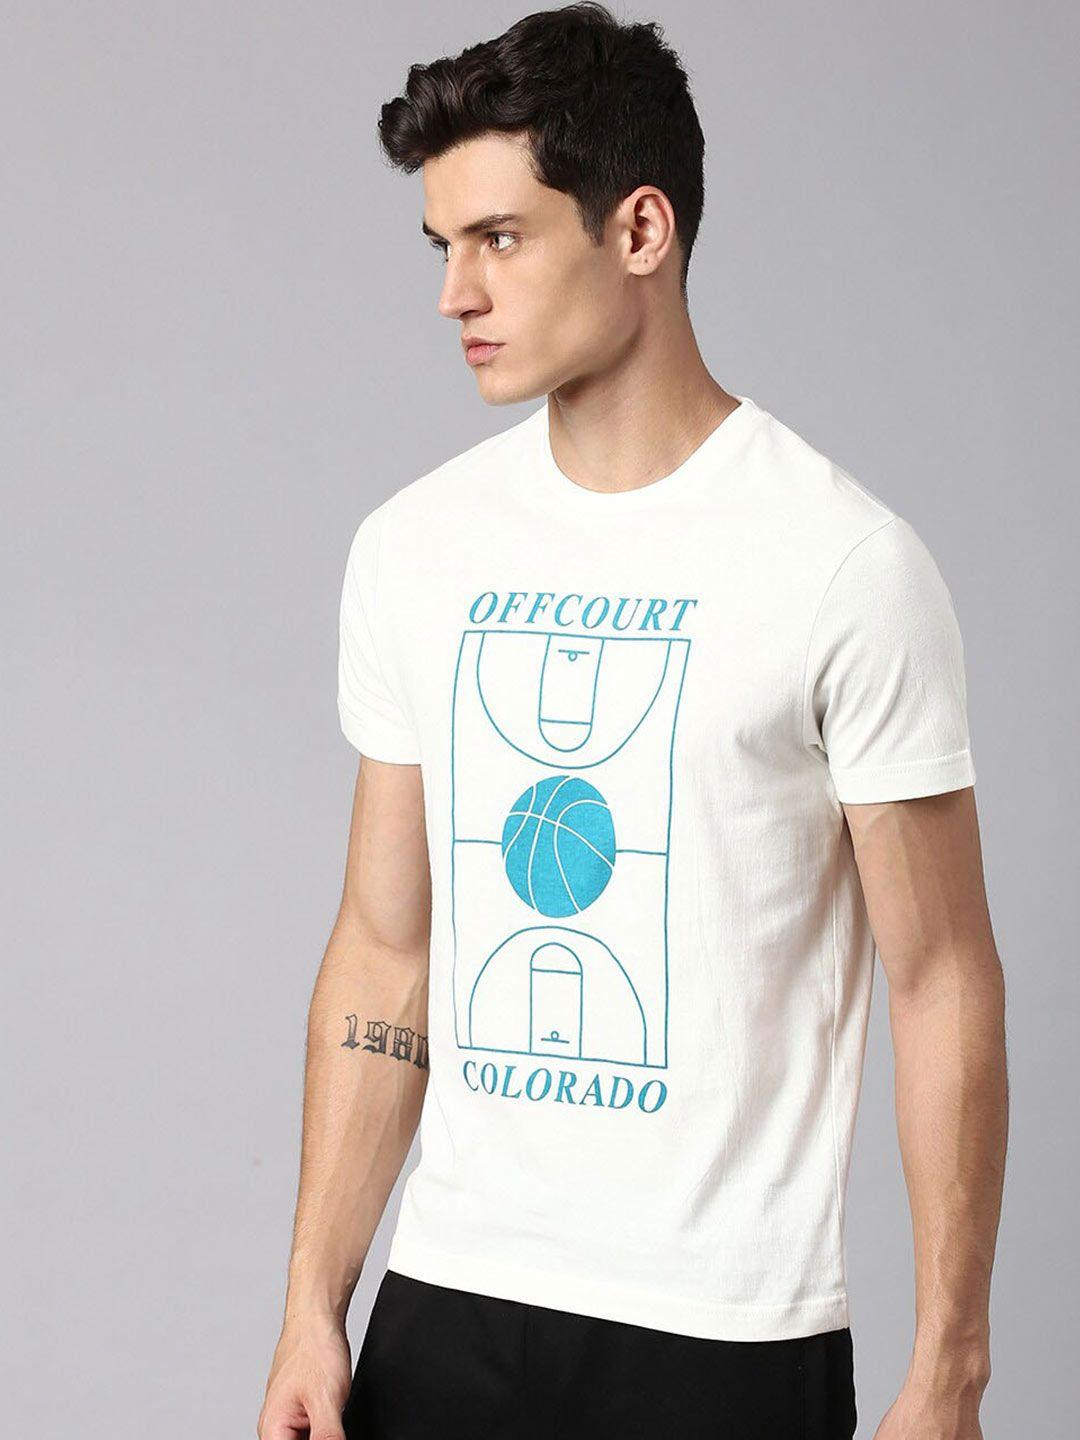 hubberholme graphic printed pure cotton t-shirt